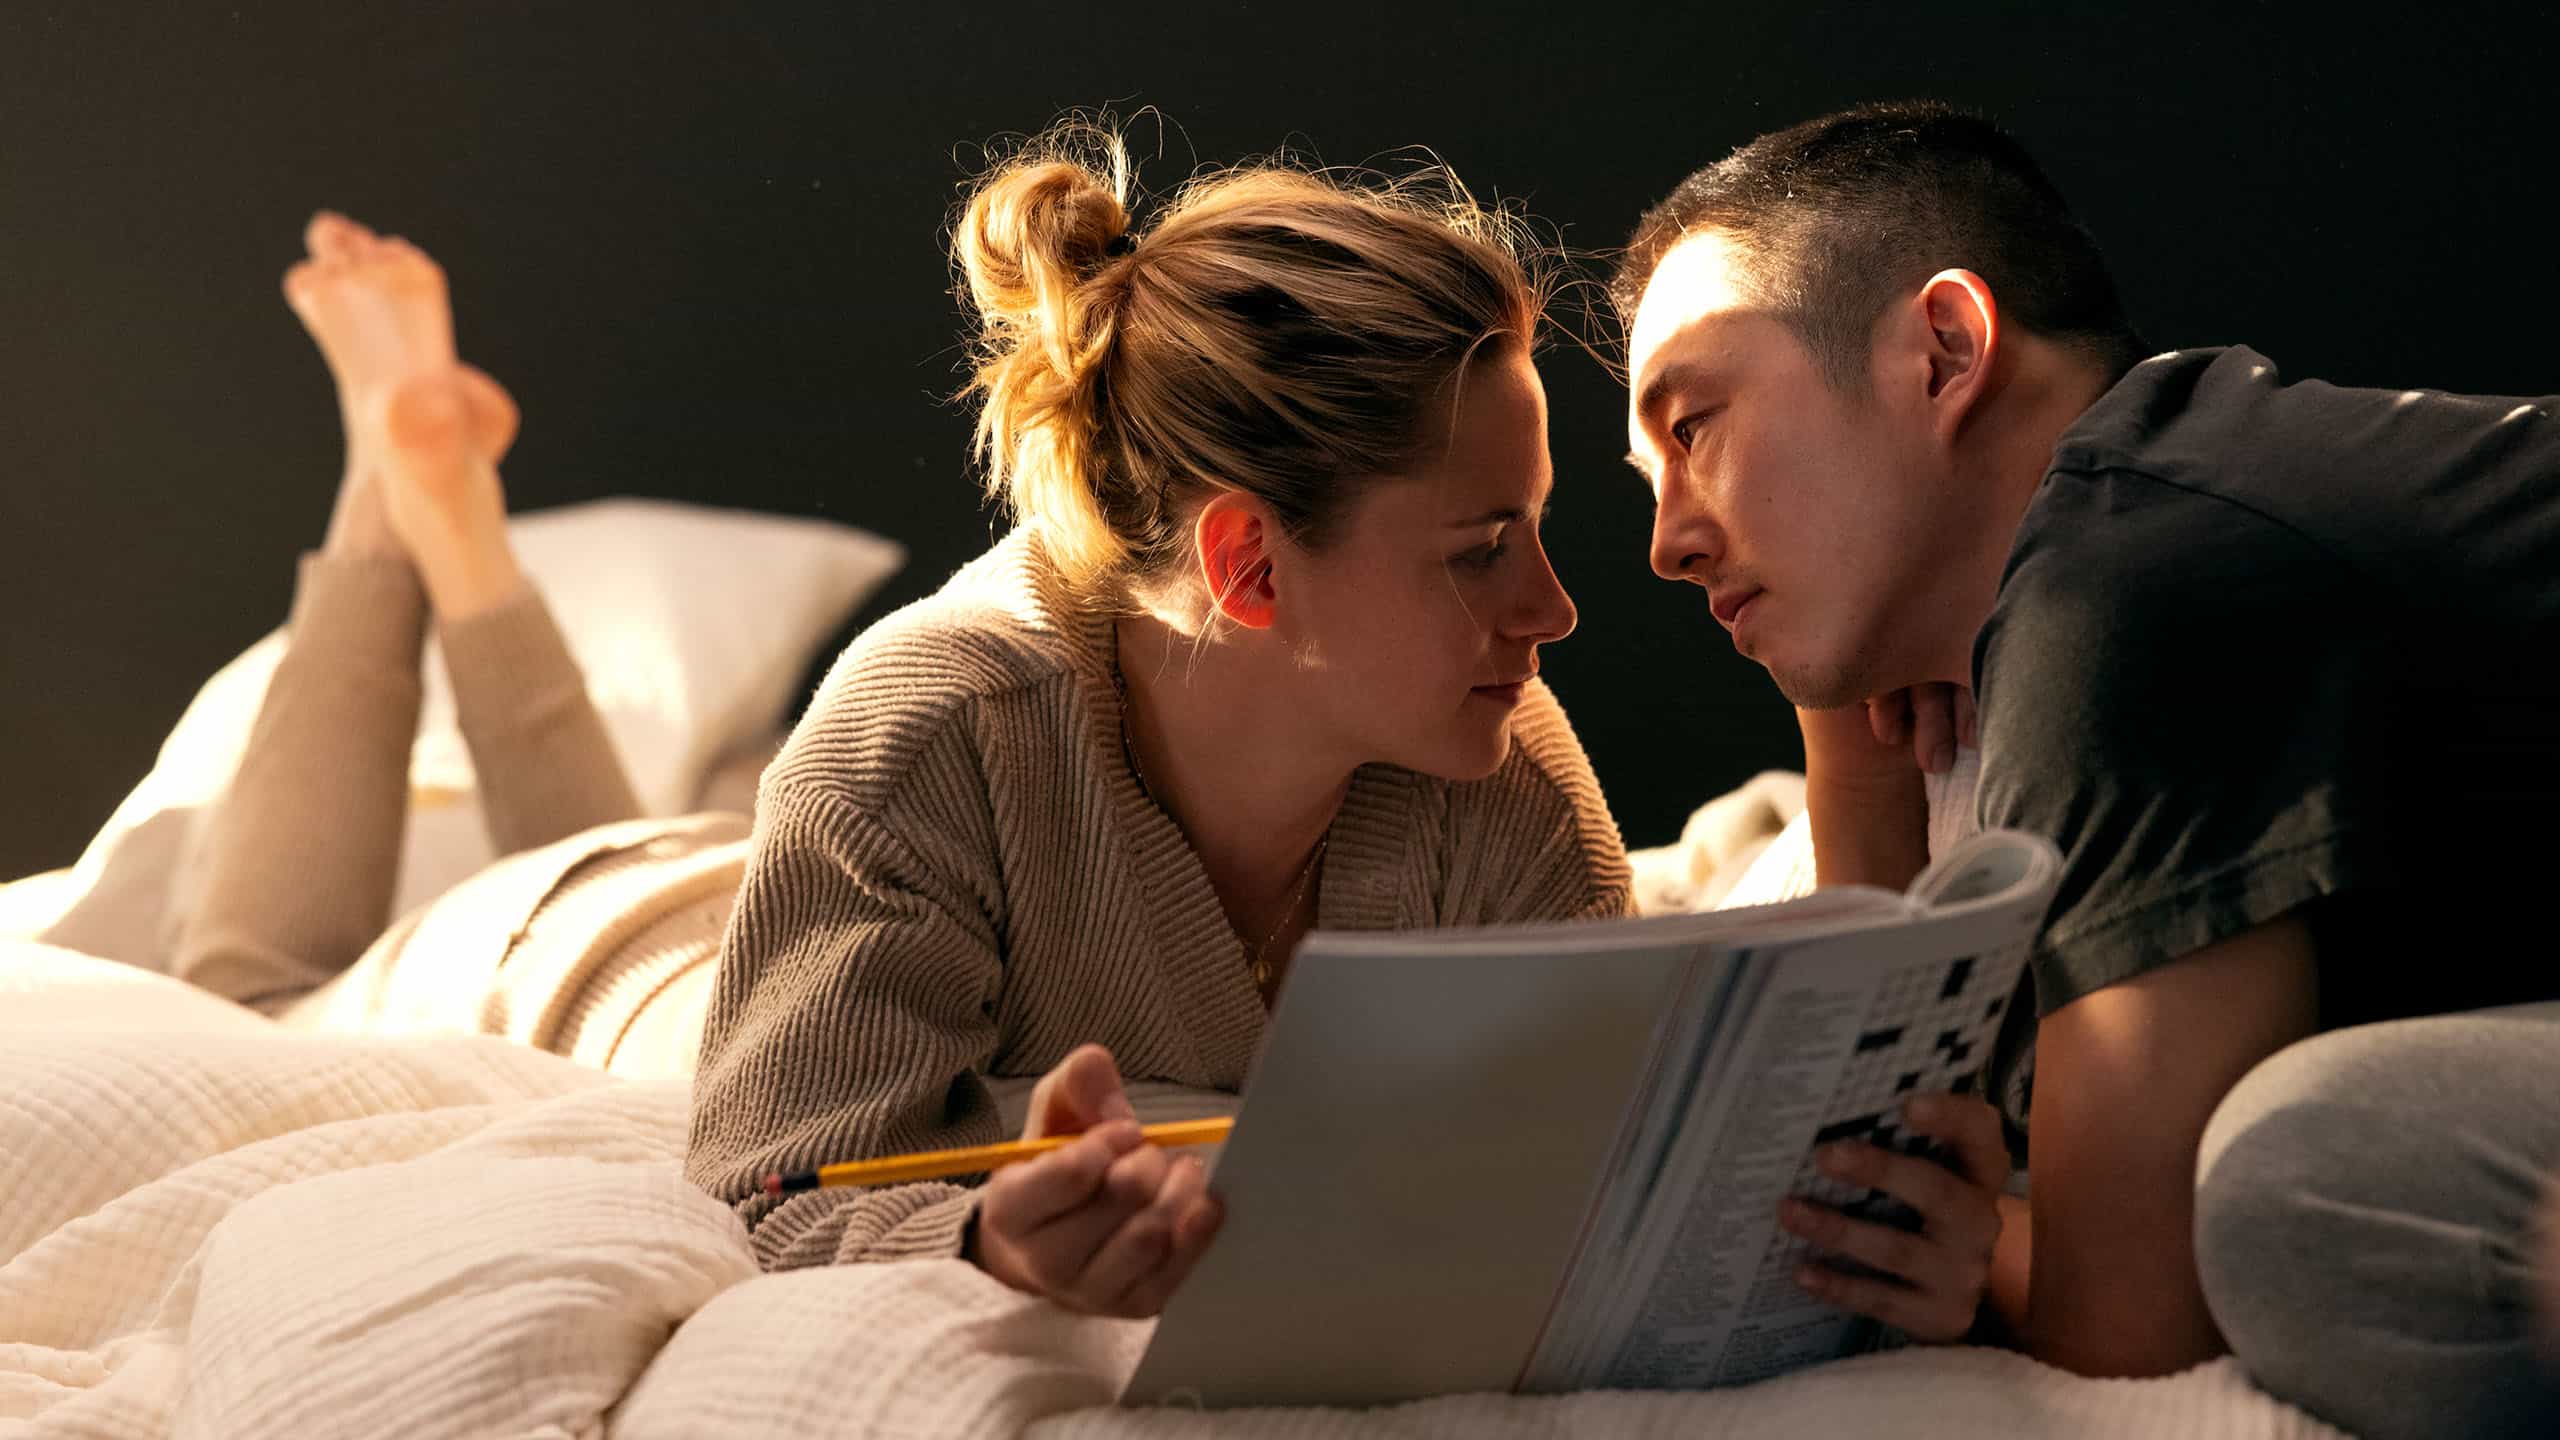 Me aka Deja (Kristen Stewart) and Iam aka Liam (Steven Yeun) sharing a moment in bed